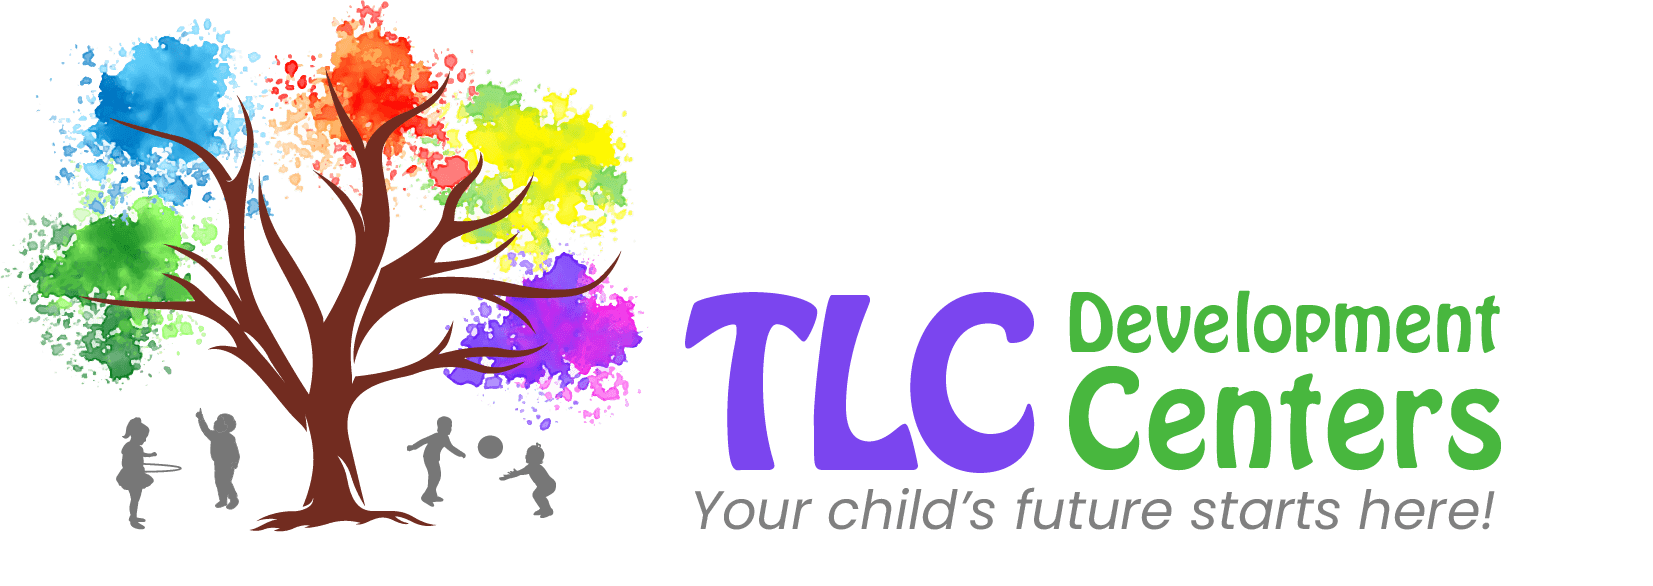 tlc development centers horizontal logo